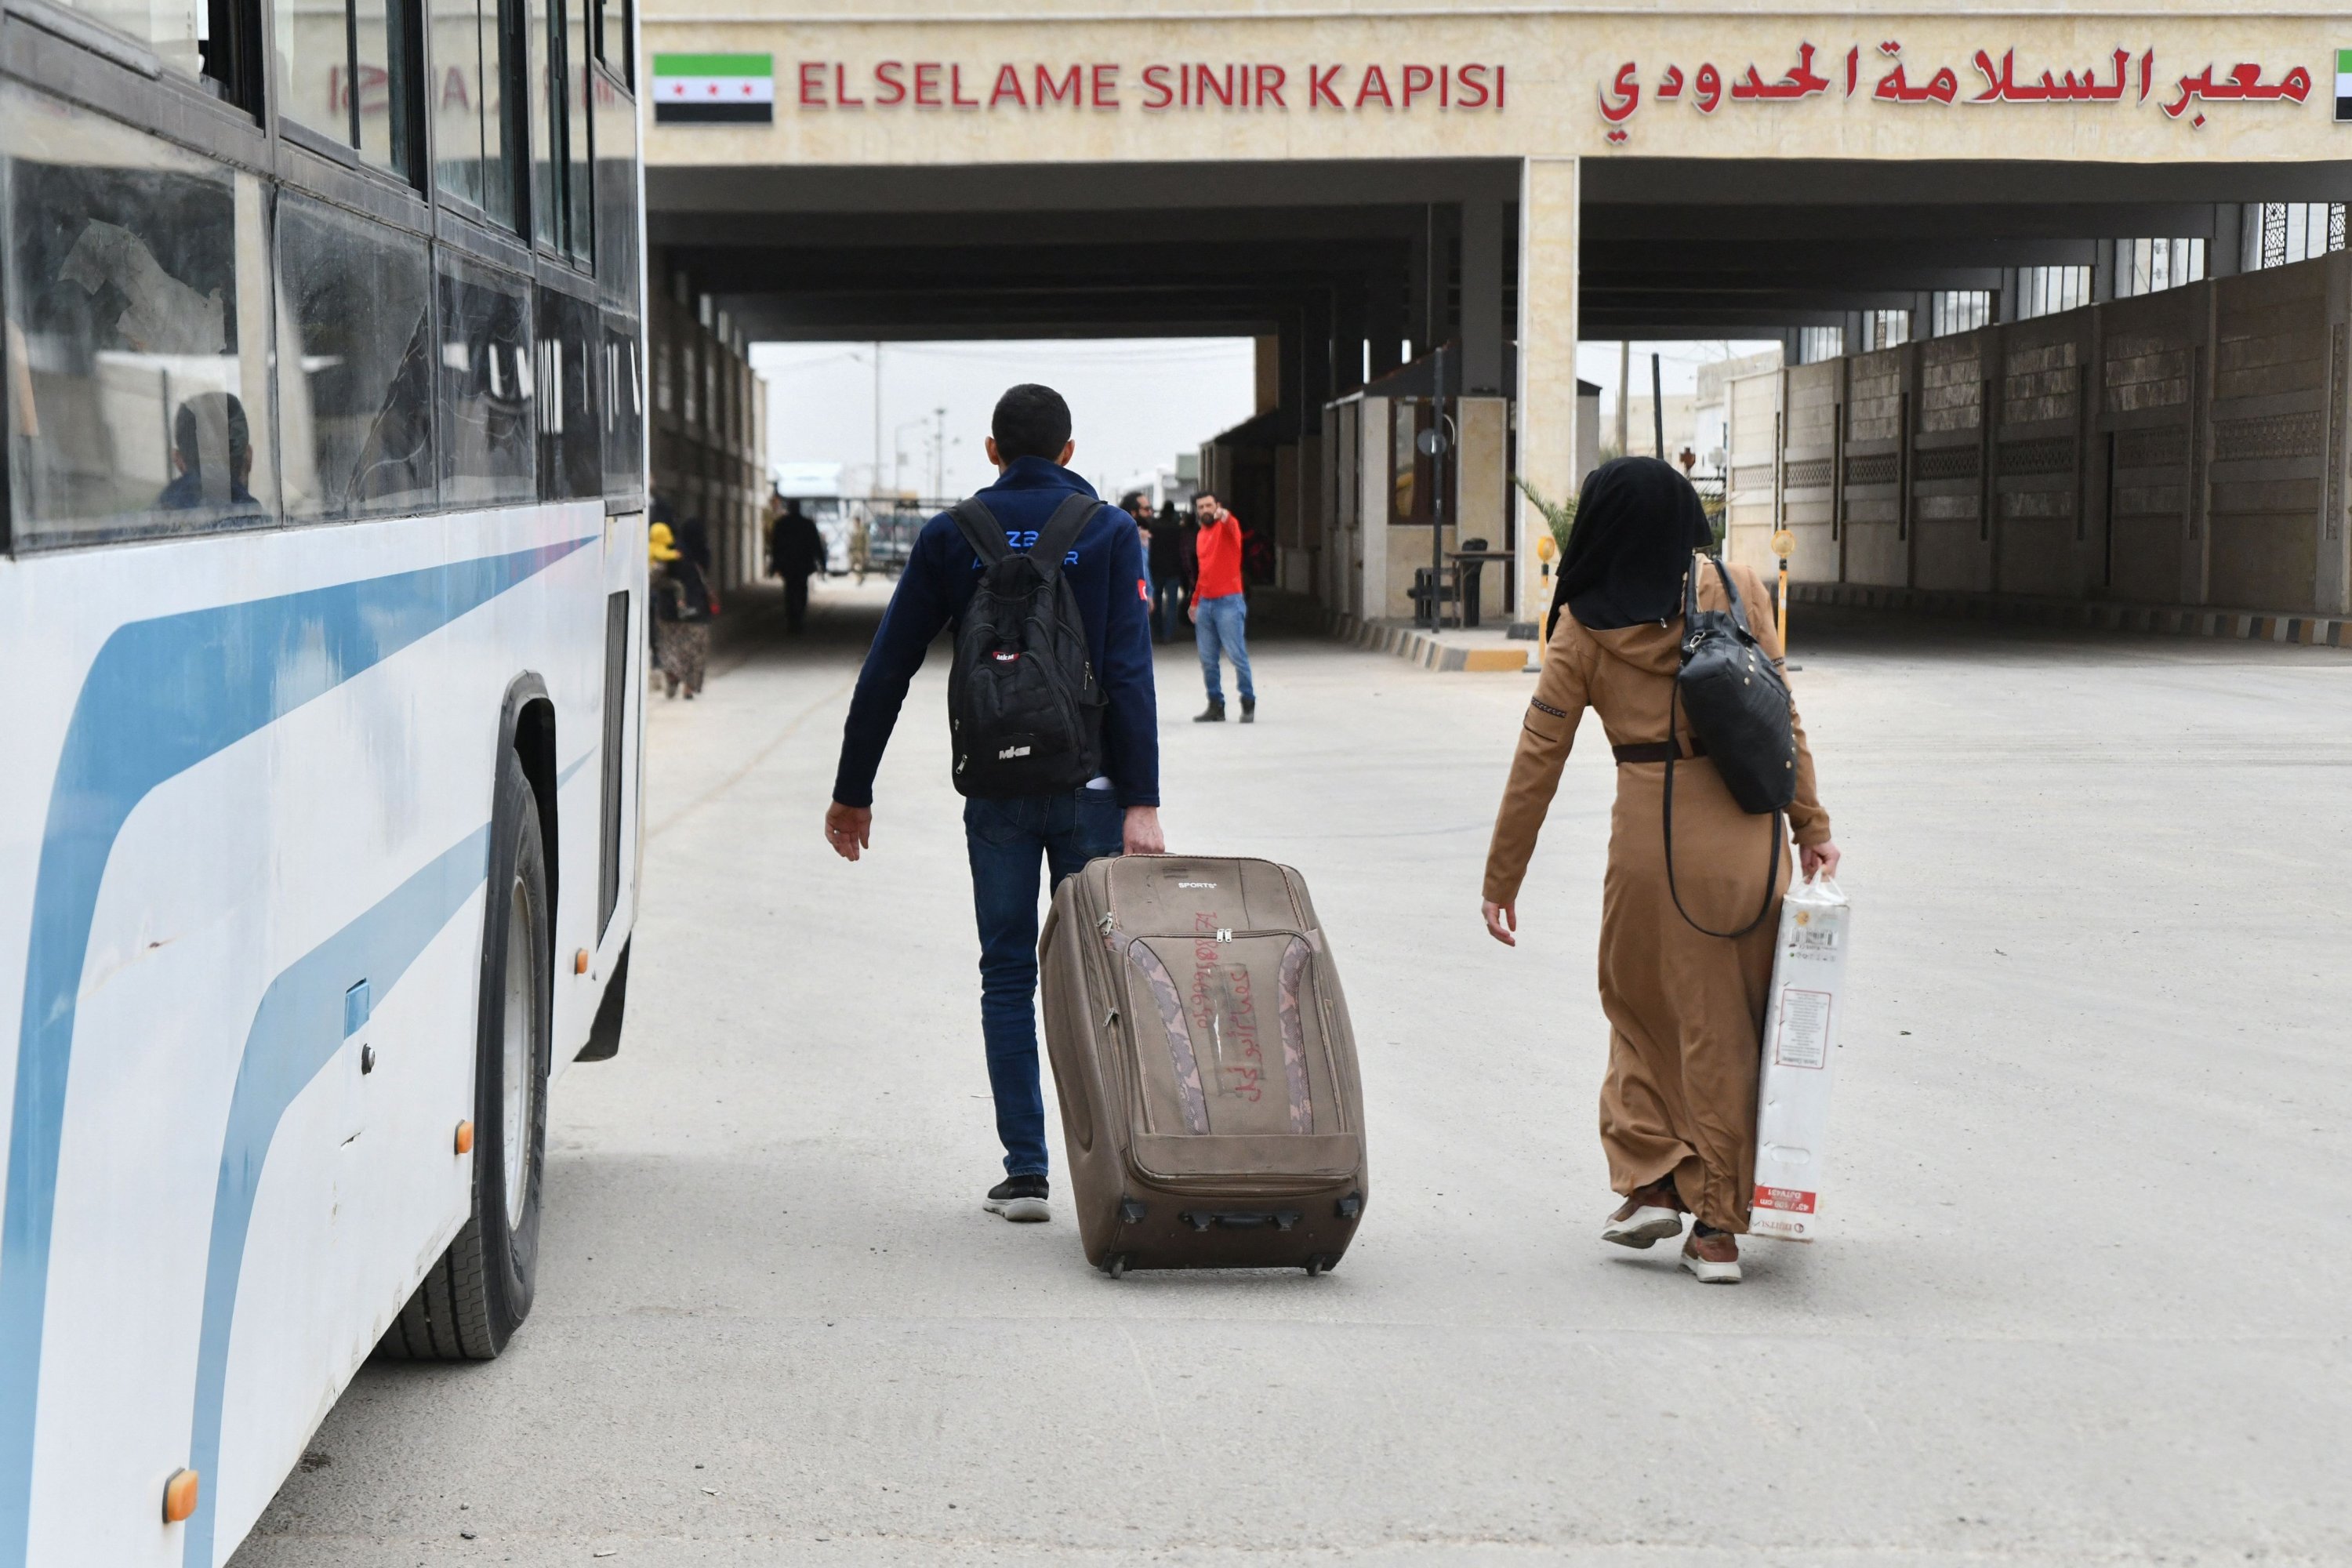 Future of migrants in Turkey sparks heated debate in politics